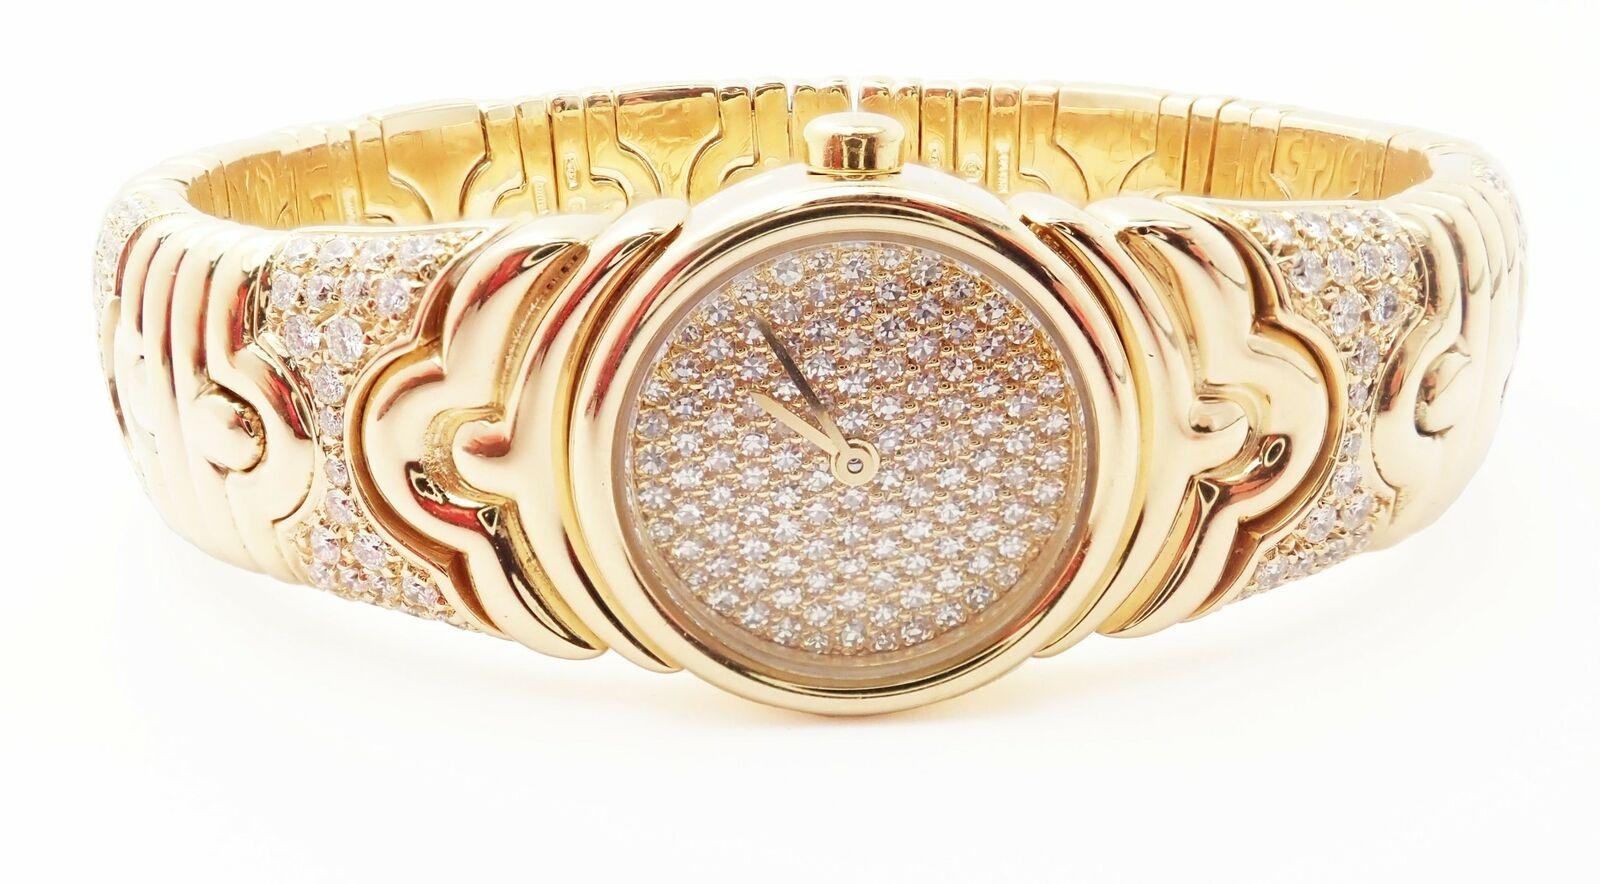 18k yellow gold diamond Parentesi bangle bracelet wristwatch by Bulgari. 
With Round brilliant cut diamonds VS1 clarity, G color total weight approximately 5.5 Carats Total Diamonds
Details:
Brand: Bulgari
Model: BJ 01
Case Dimensions: 20mm
Dial: